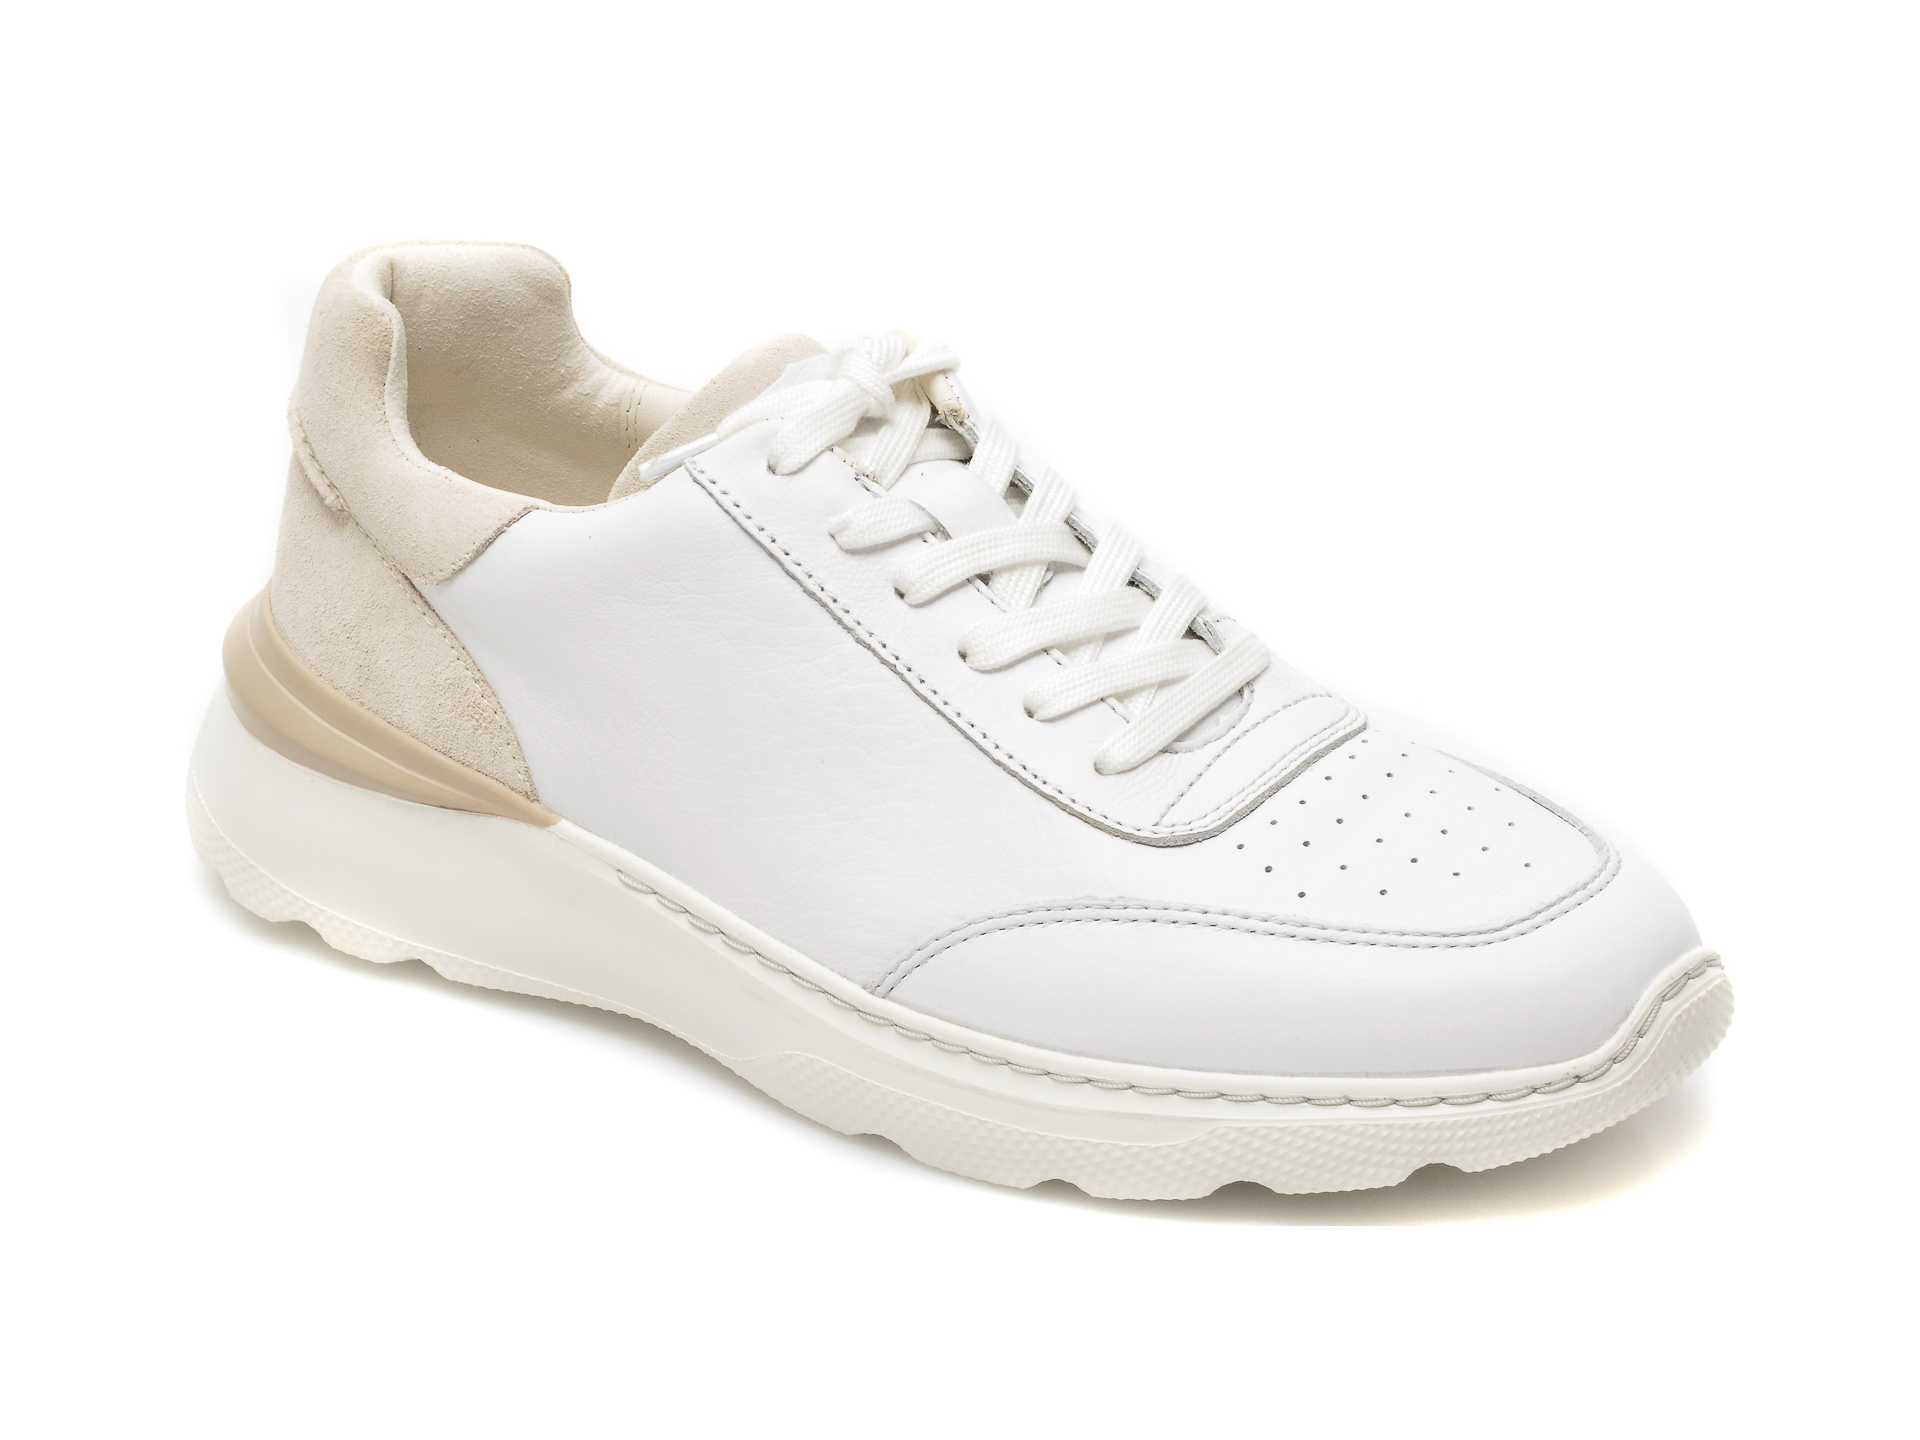 Pantofi CLARKS albi, Sprintlitelace, din piele naturala imagine Black Friday 2021